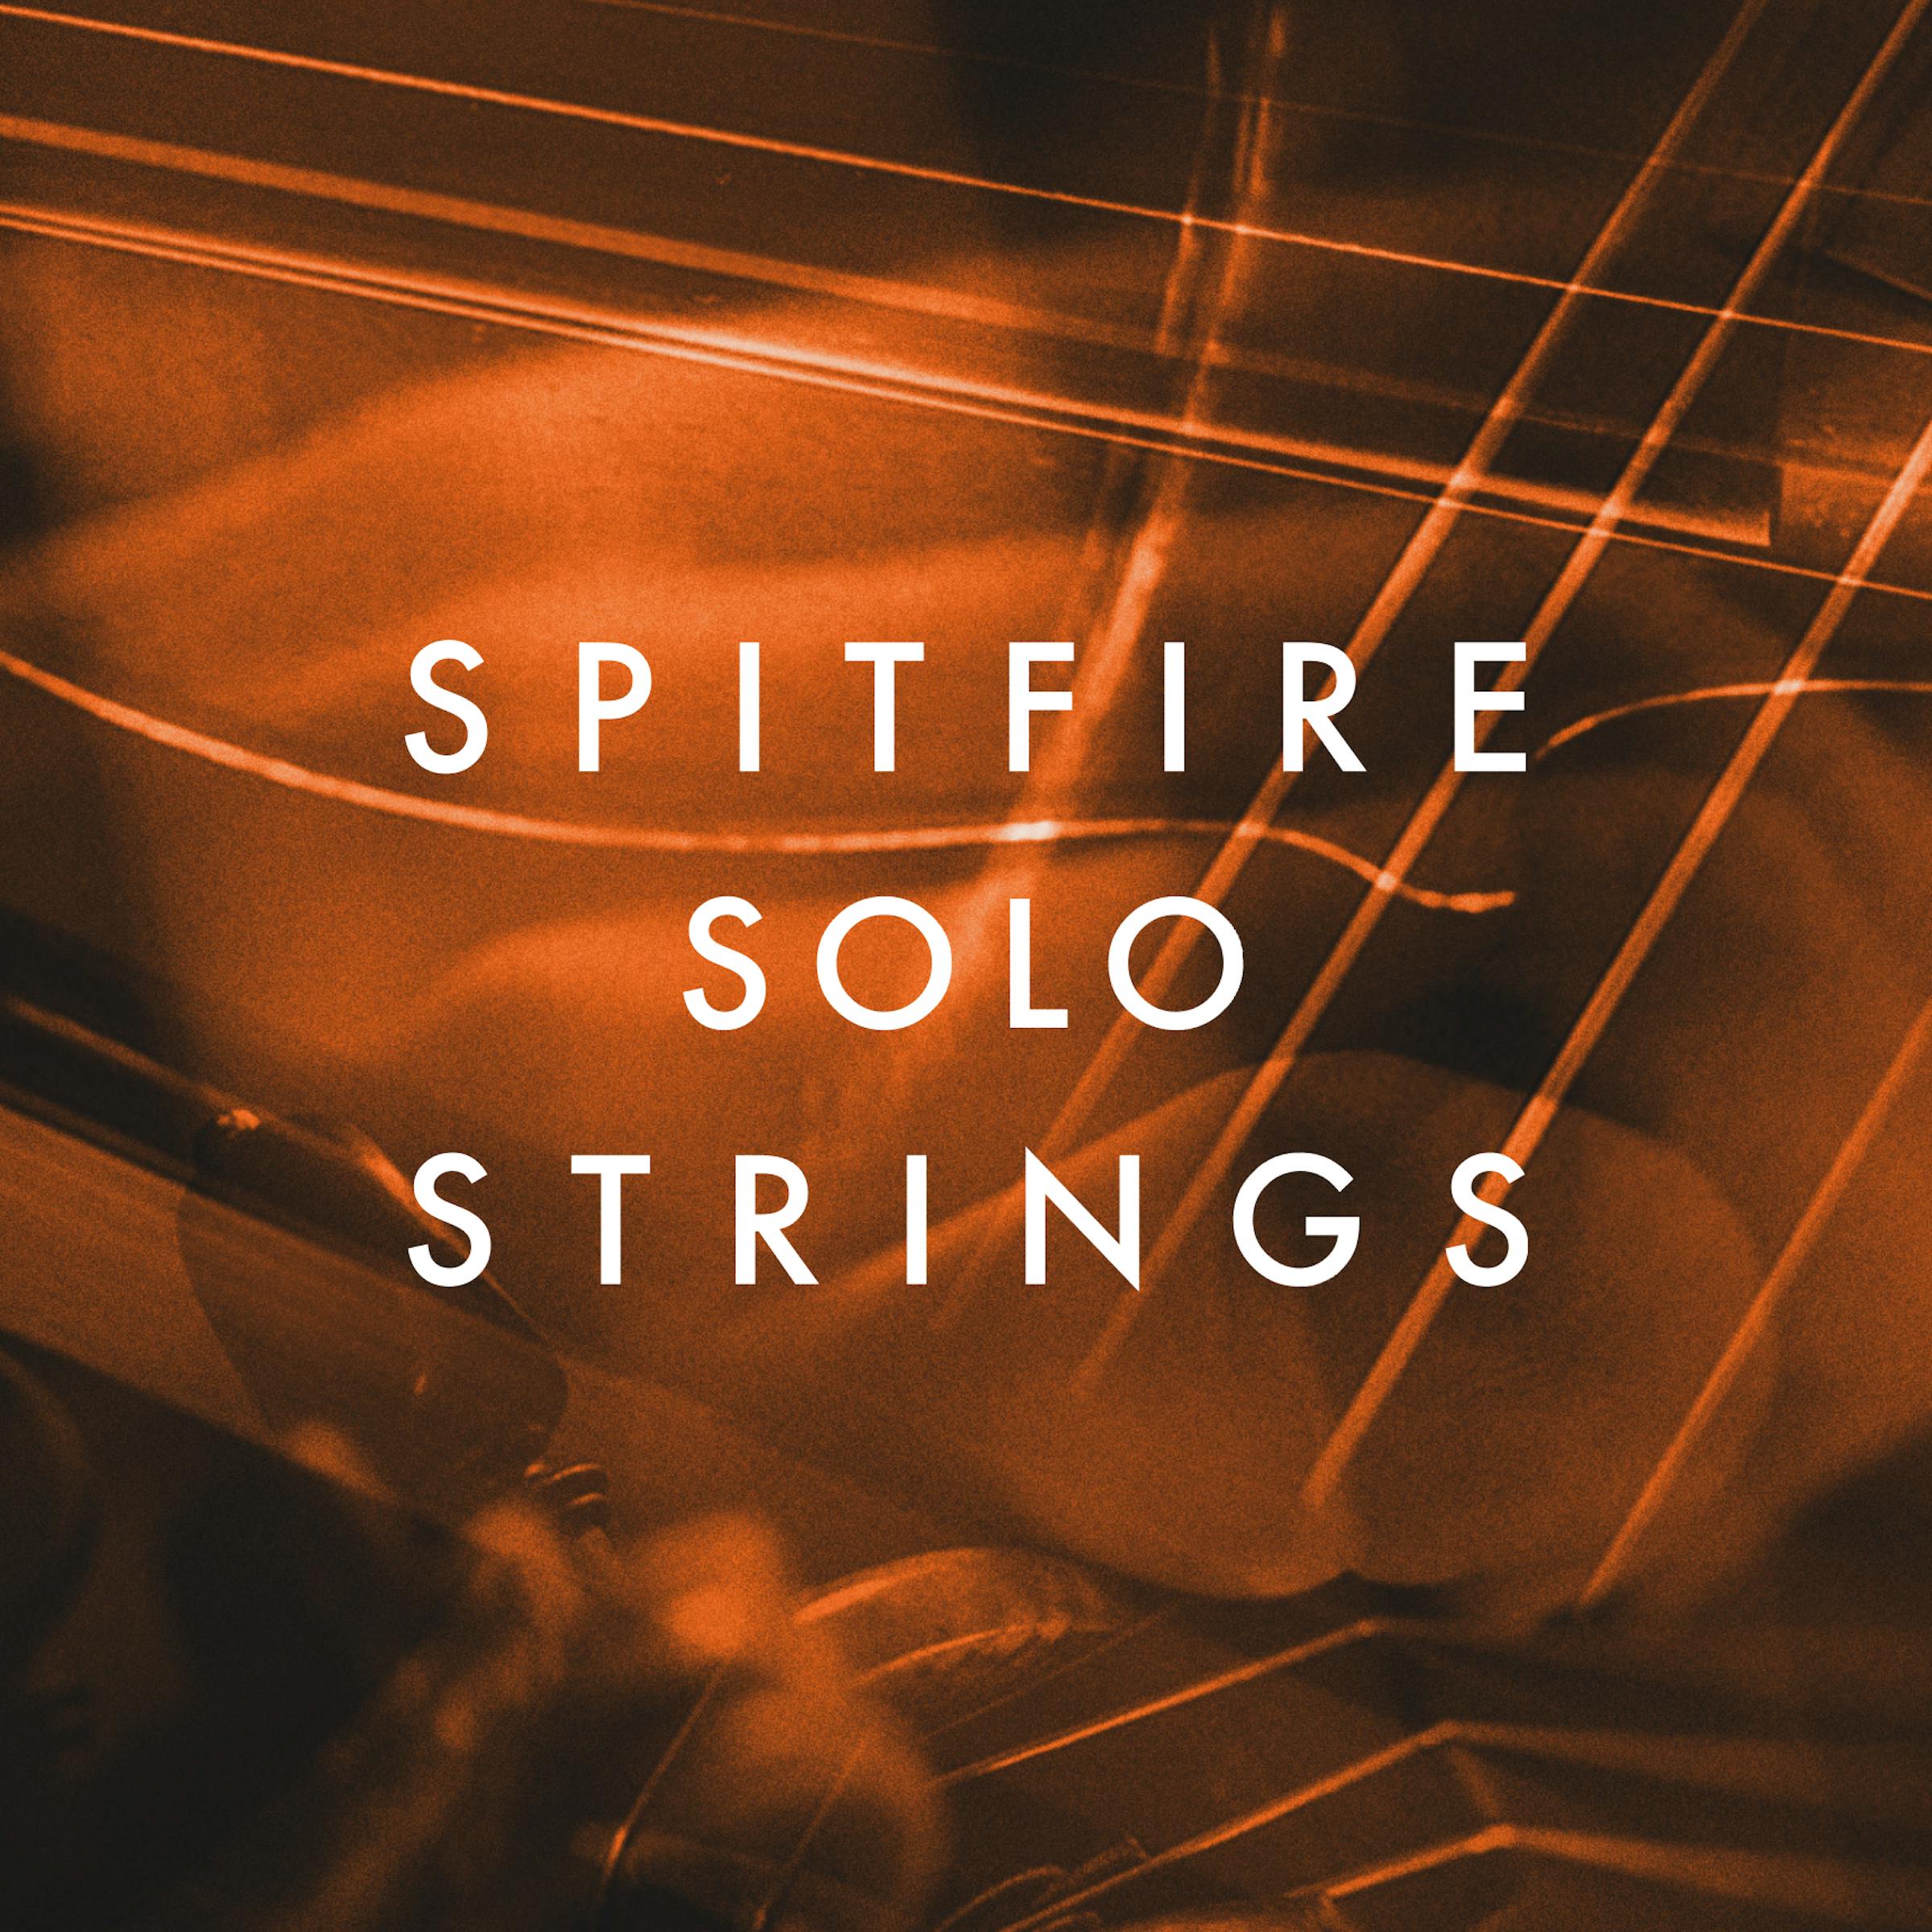 Spitfire Solo Strings artwork